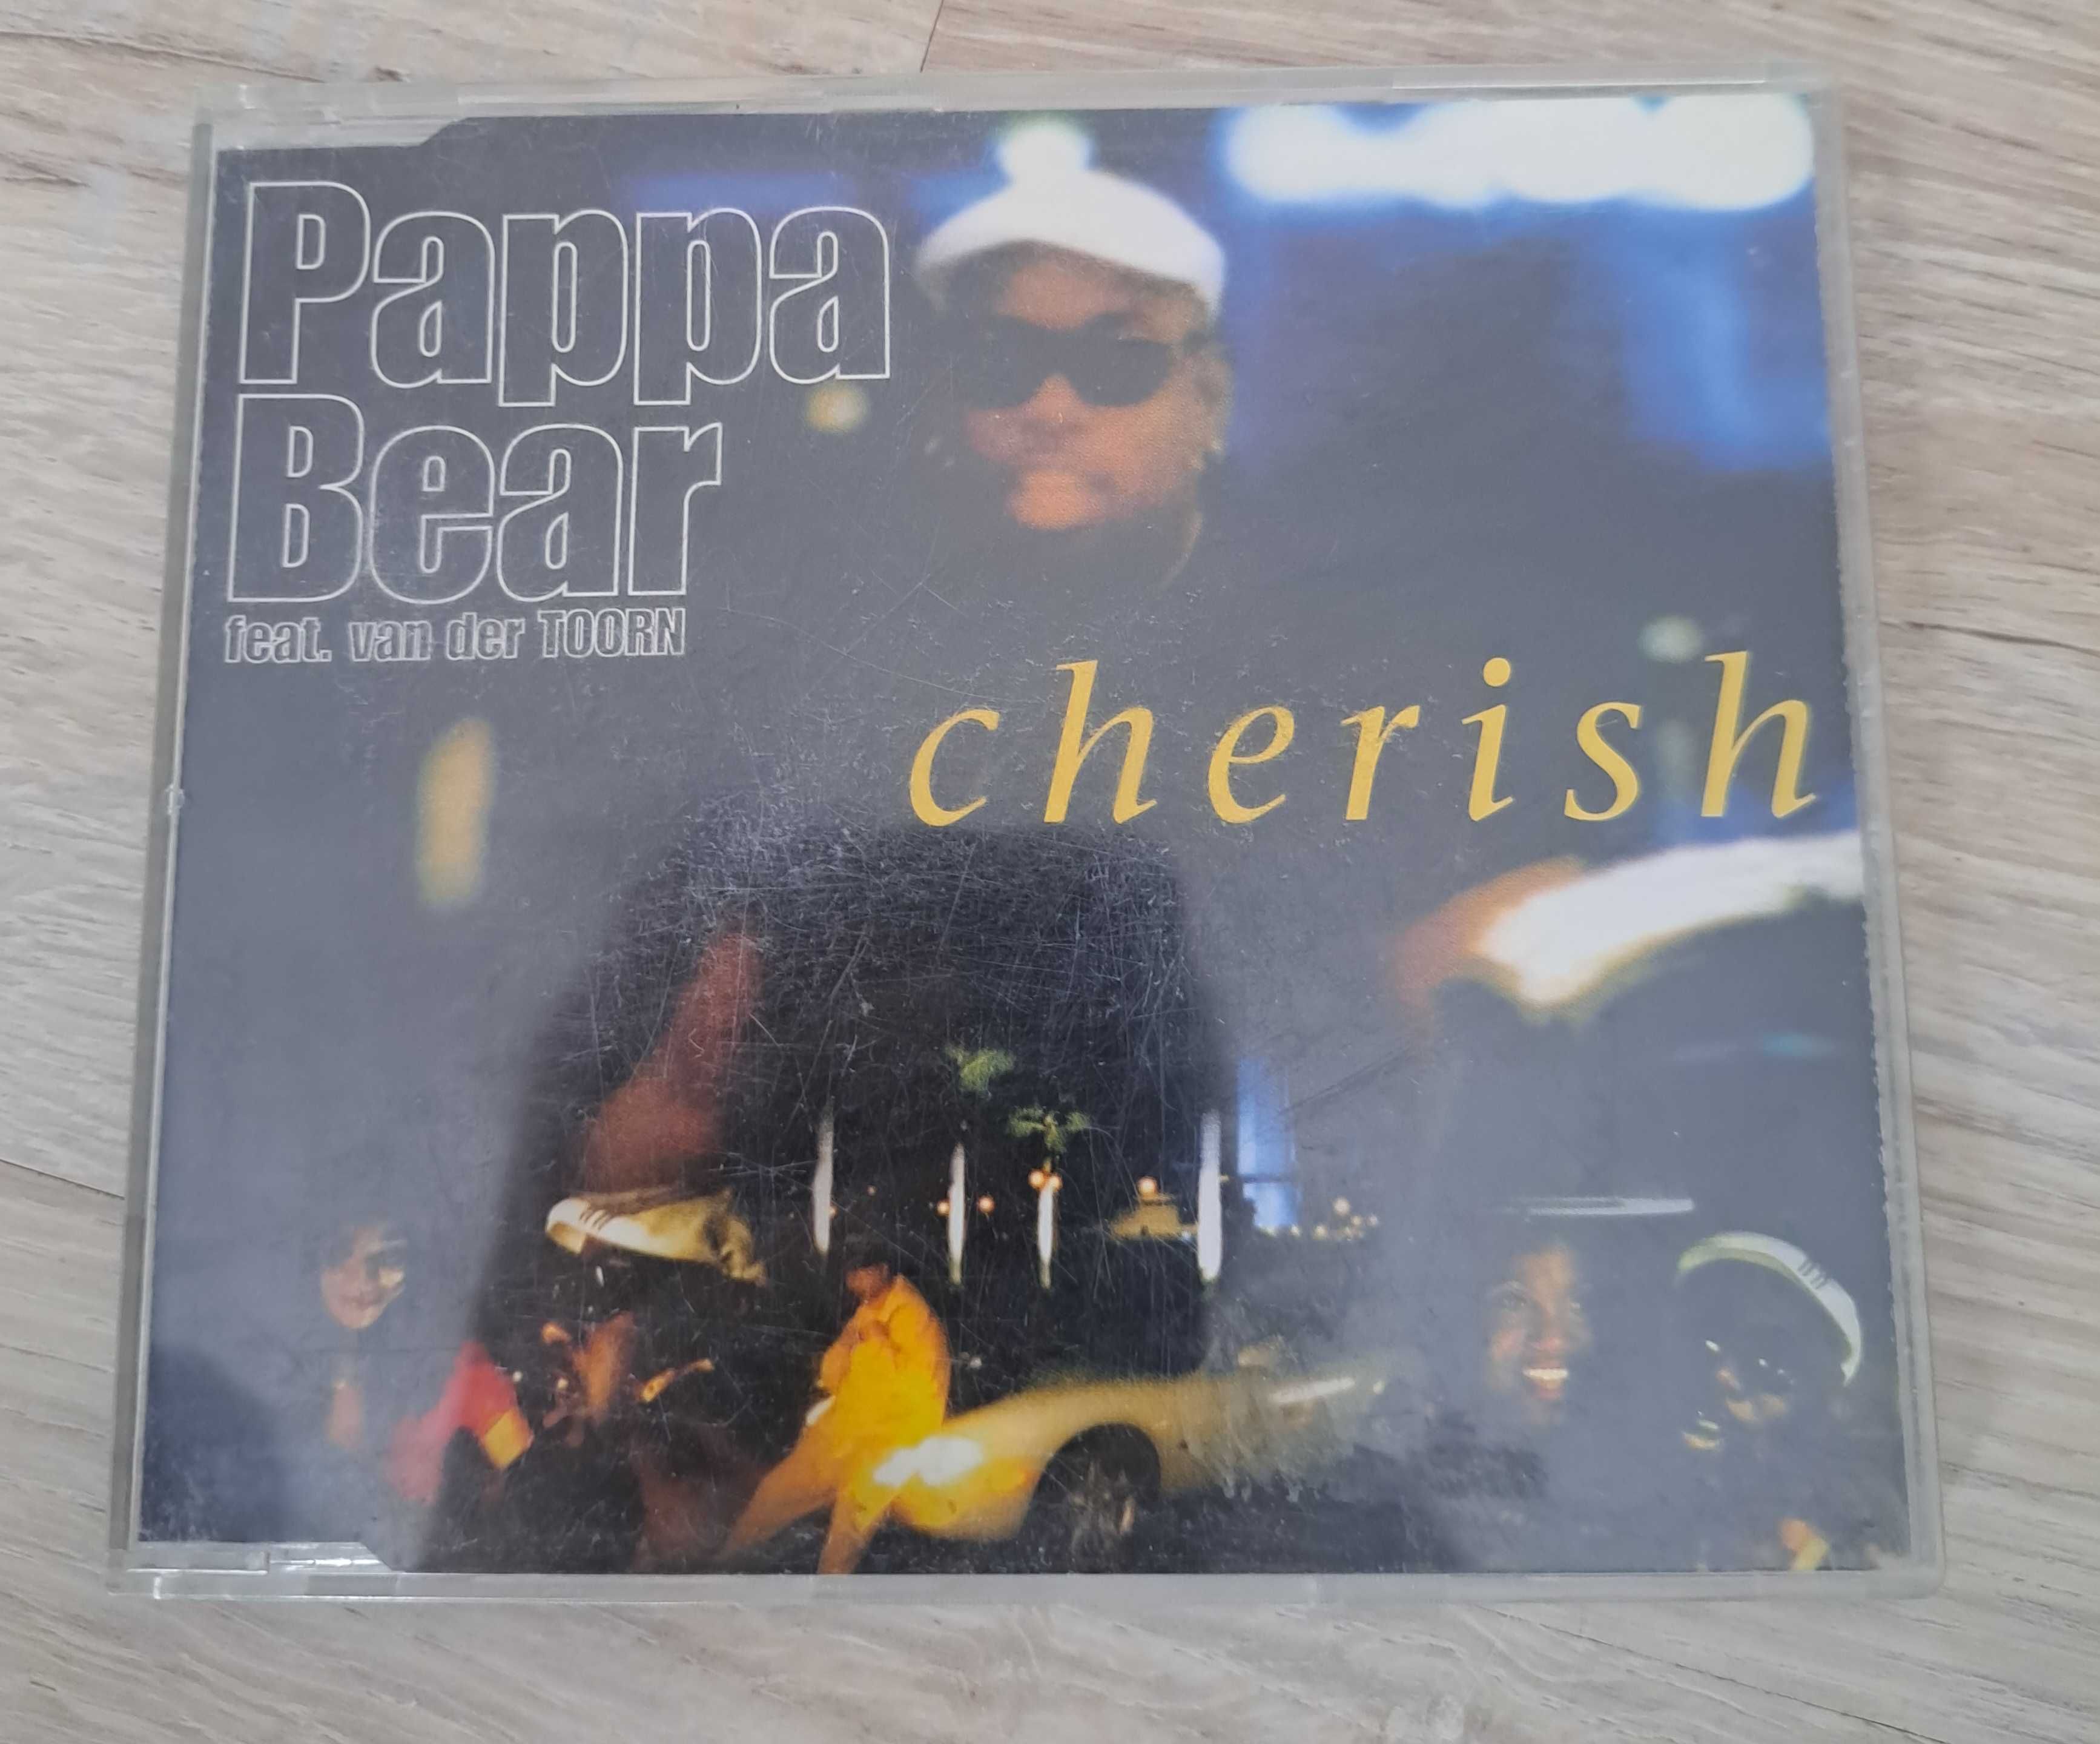 Papa Bear - Cherish